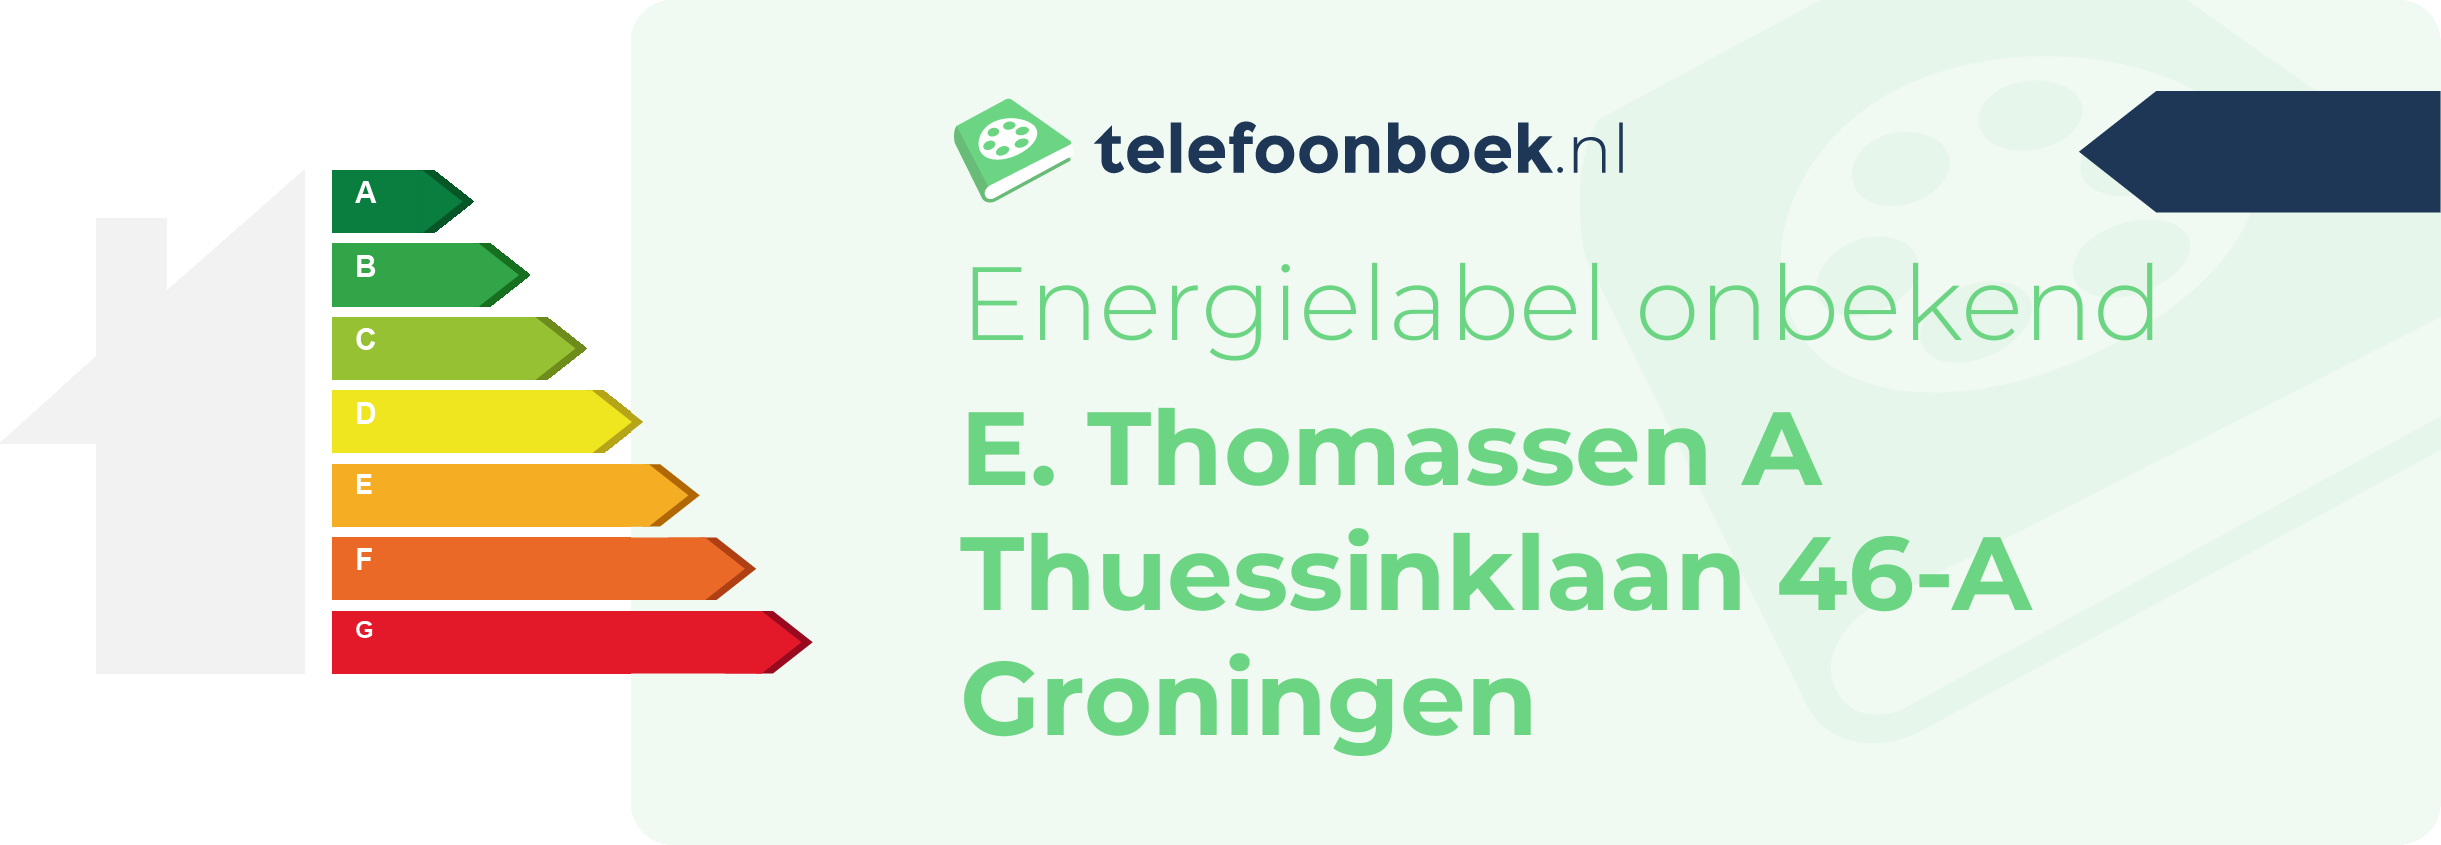 Energielabel E. Thomassen A Thuessinklaan 46-A Groningen